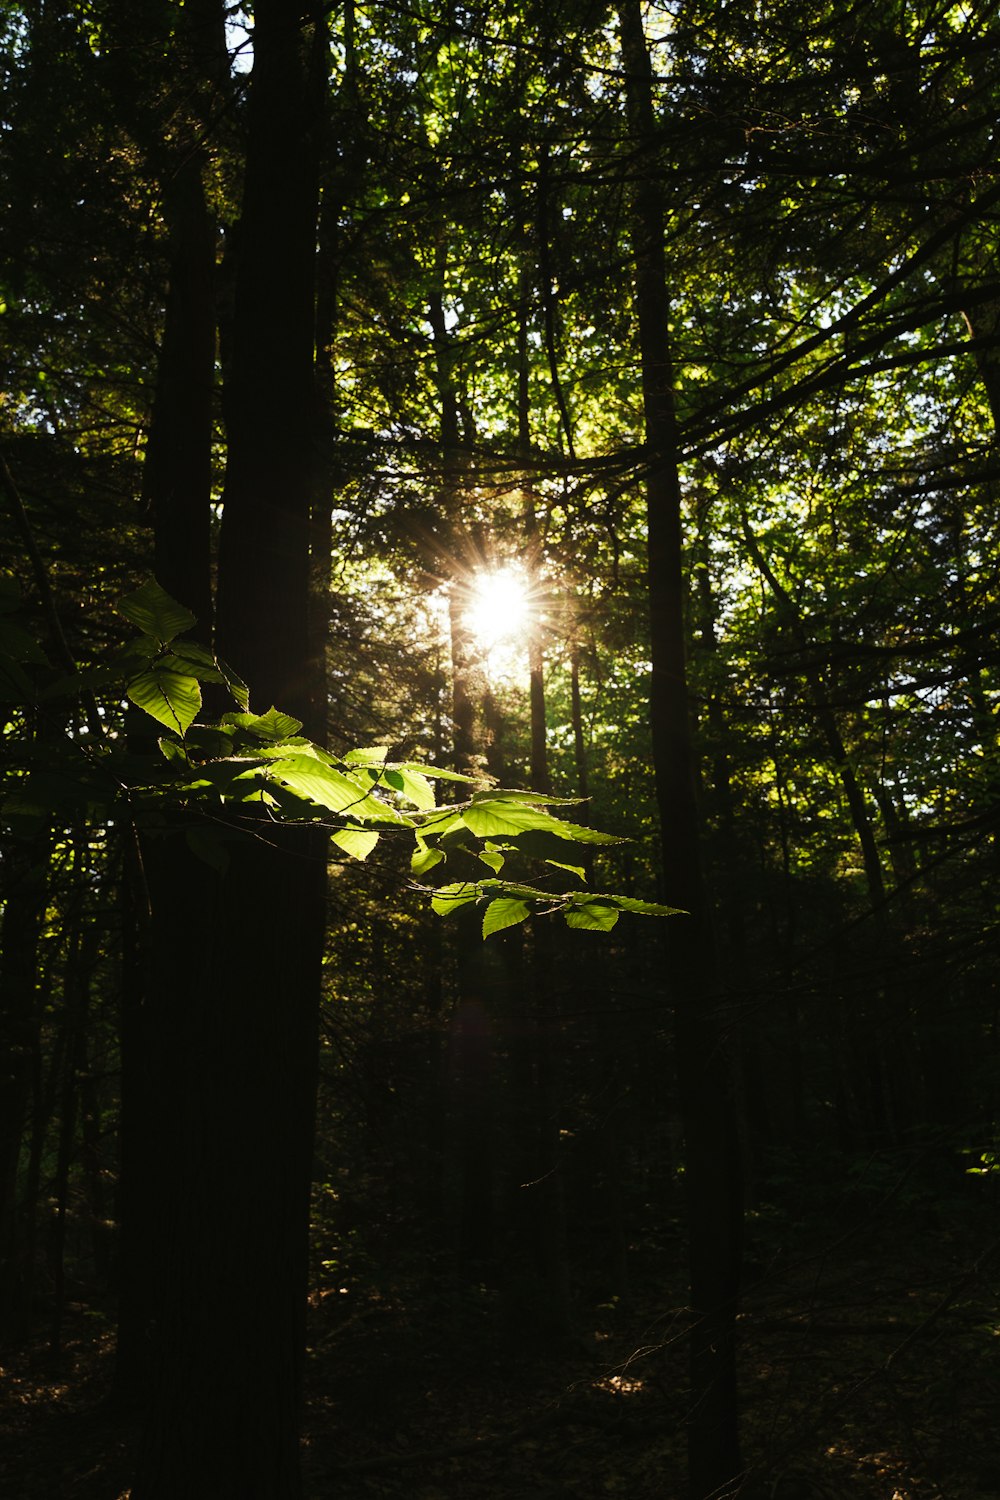 a light shining through the trees